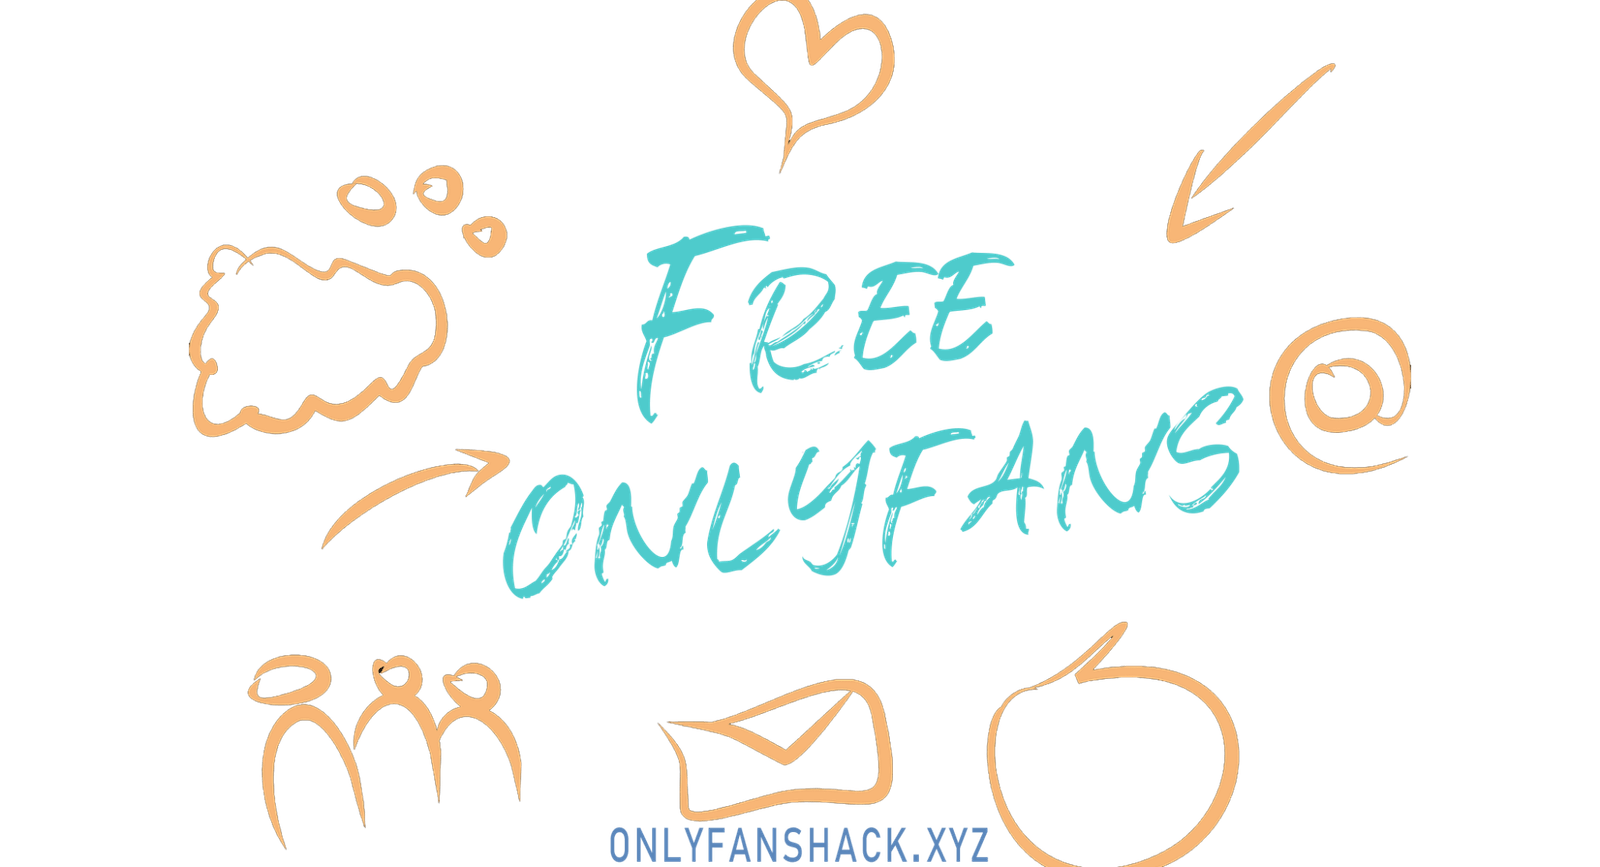 Onlyfans.com premium account